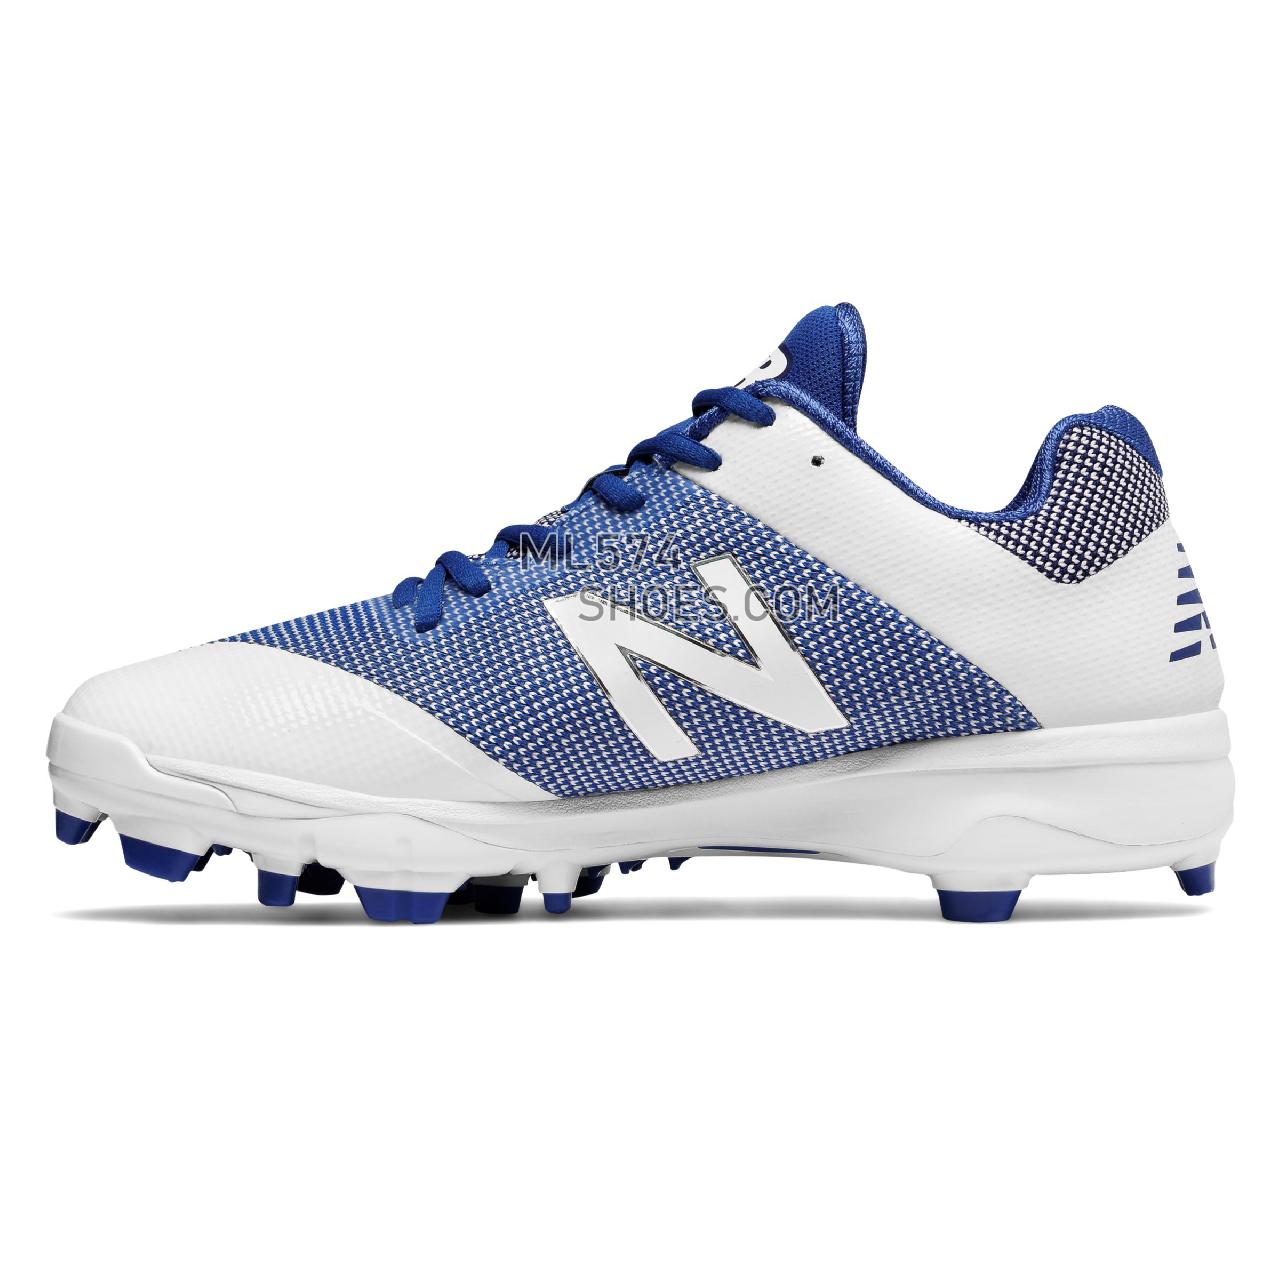 New Balance TPU 4040v4 - Men's 4040 - Baseball Royal Blue with White - PL4040D4